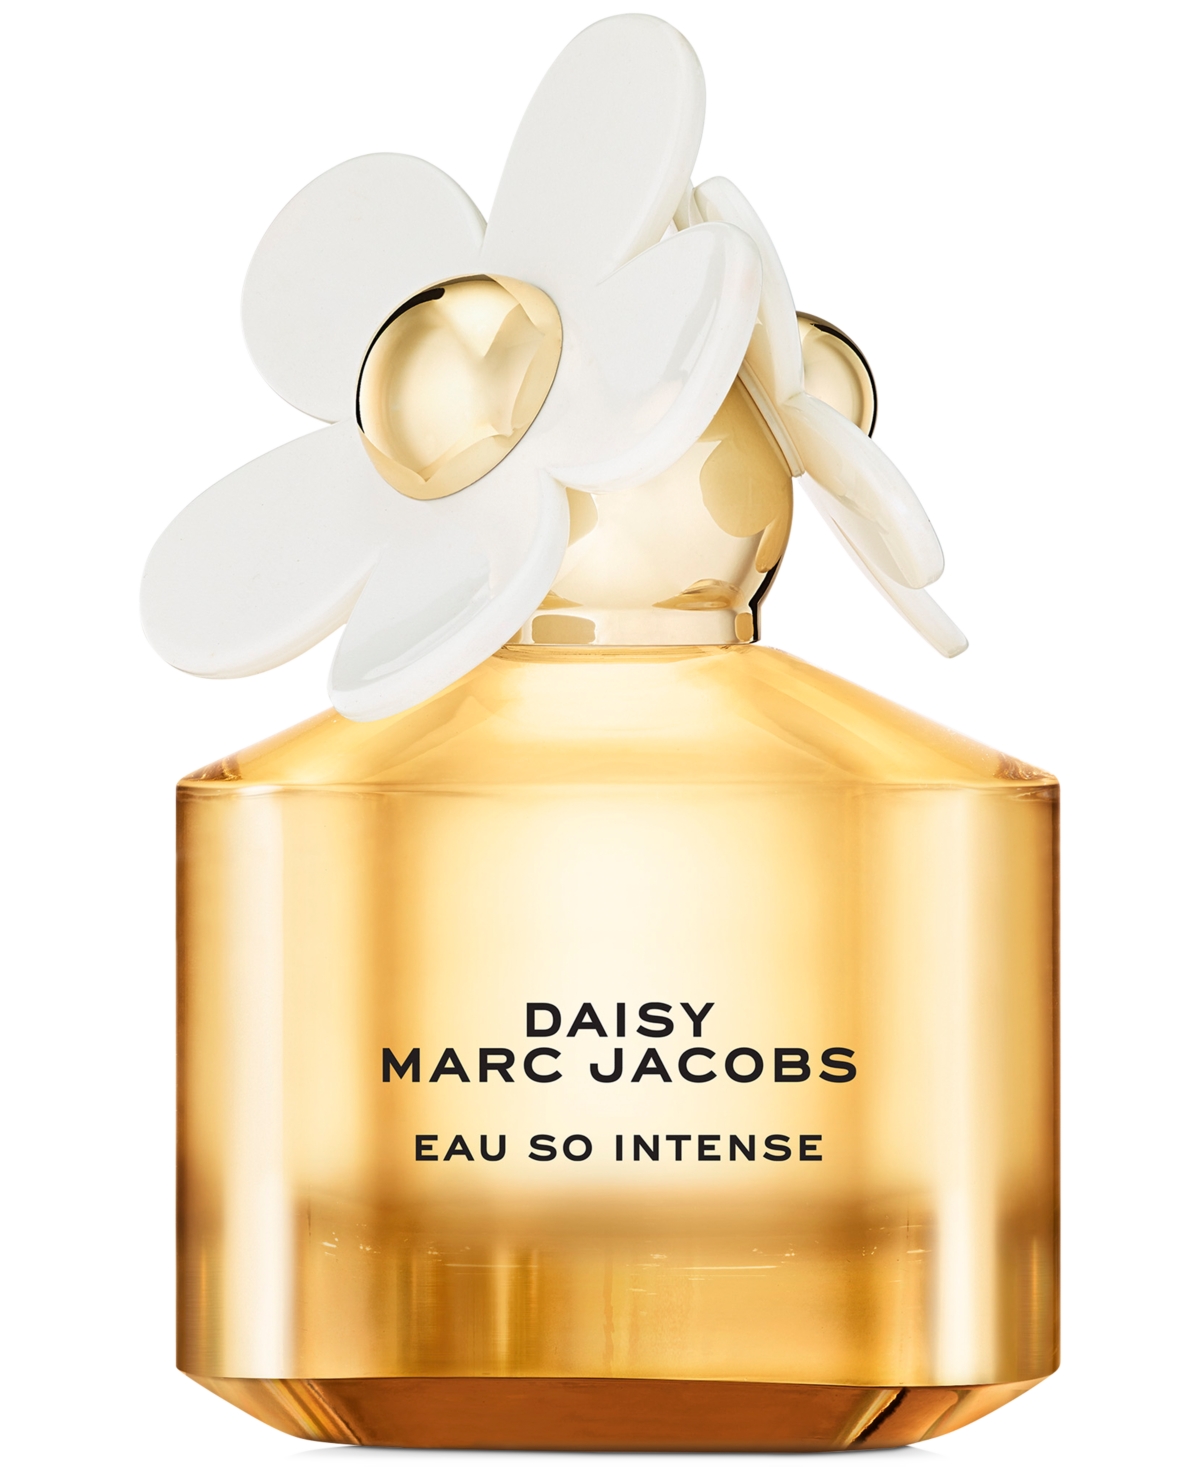 Marc Jacobs Daisy Eau So Intense Eau de Parfum Spray, 3.4-oz.